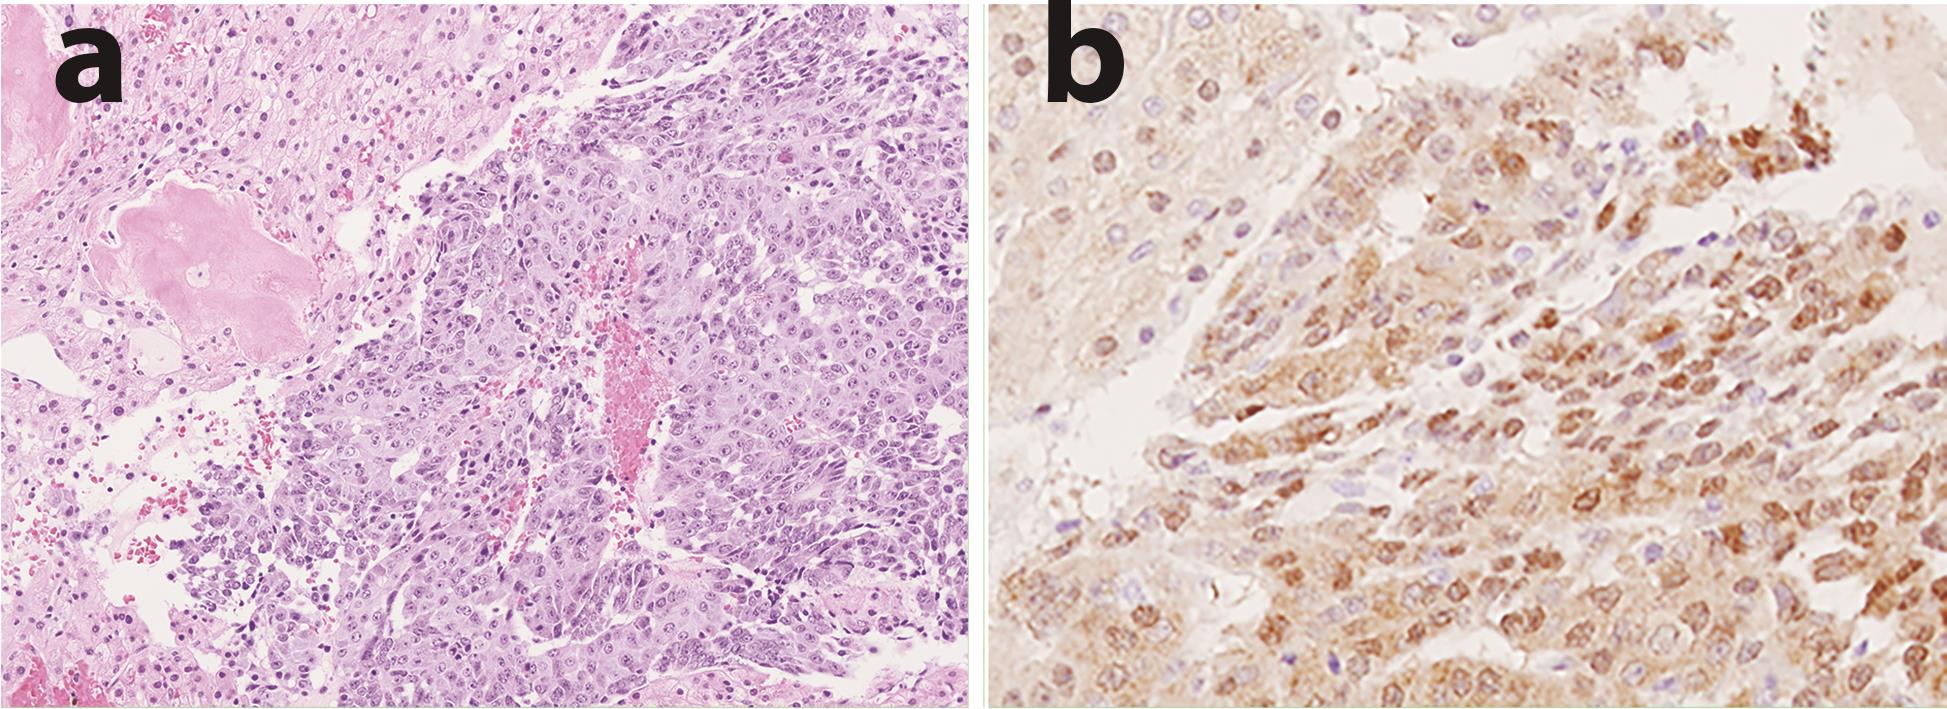 YAP1 immuno-reactivity in a case of hepatoblastoma (HB).